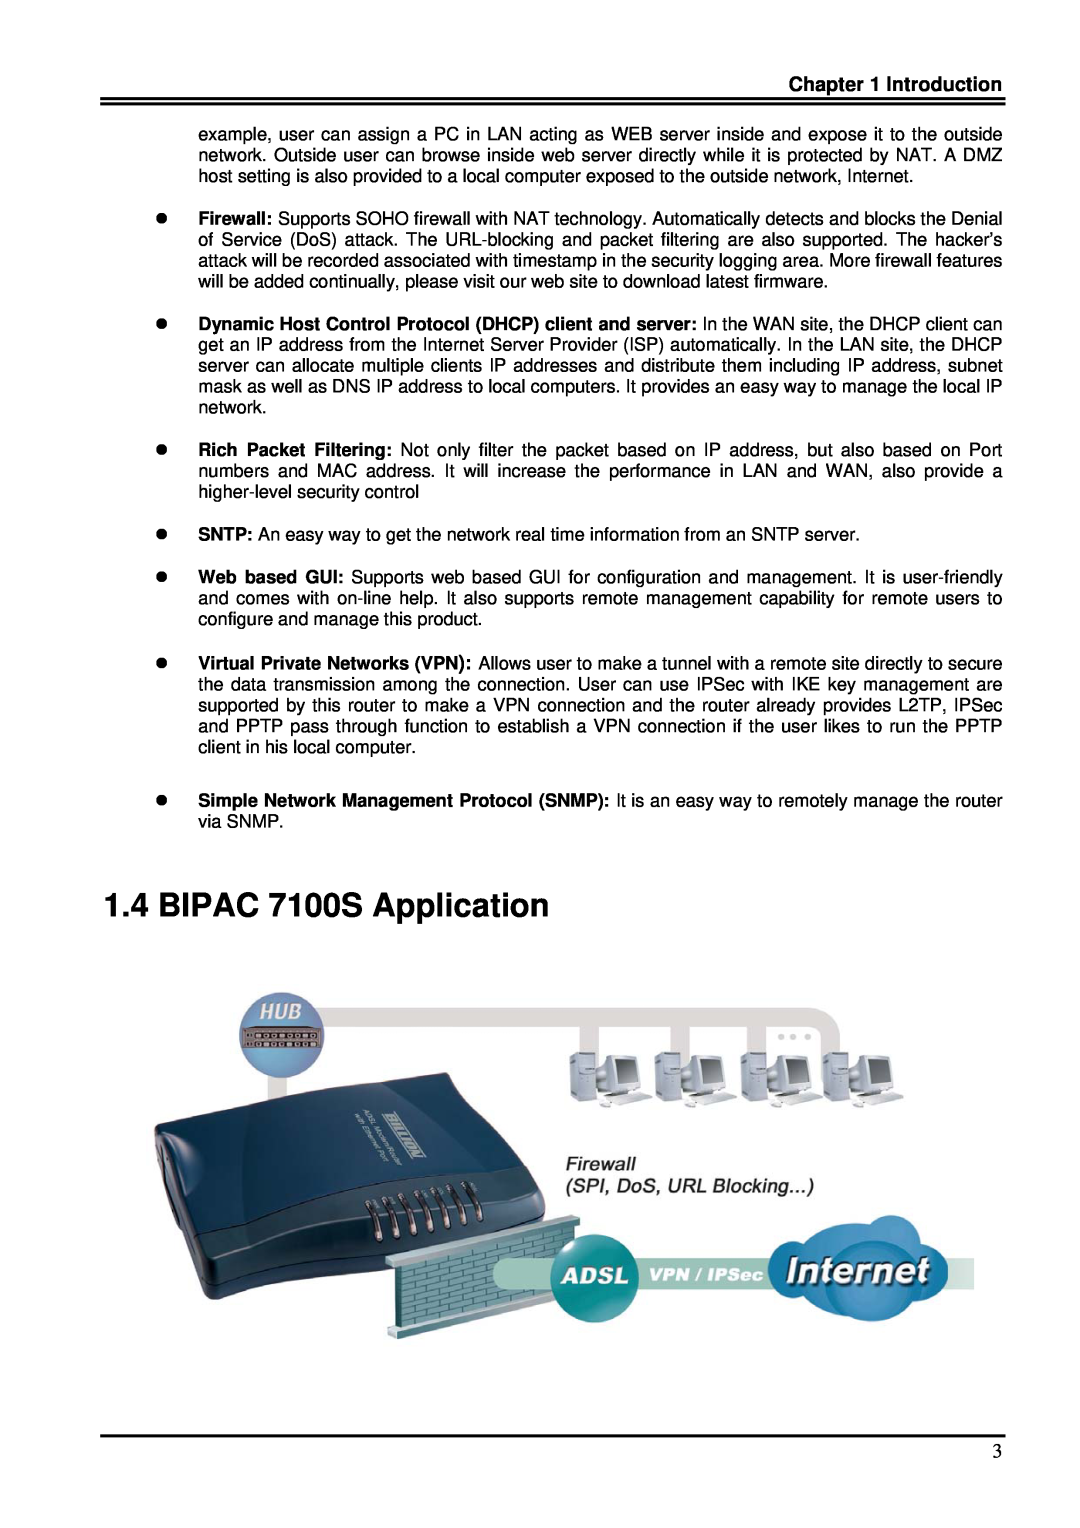 Billion Electric Company user manual BIPAC 7100S Application, Introduction 